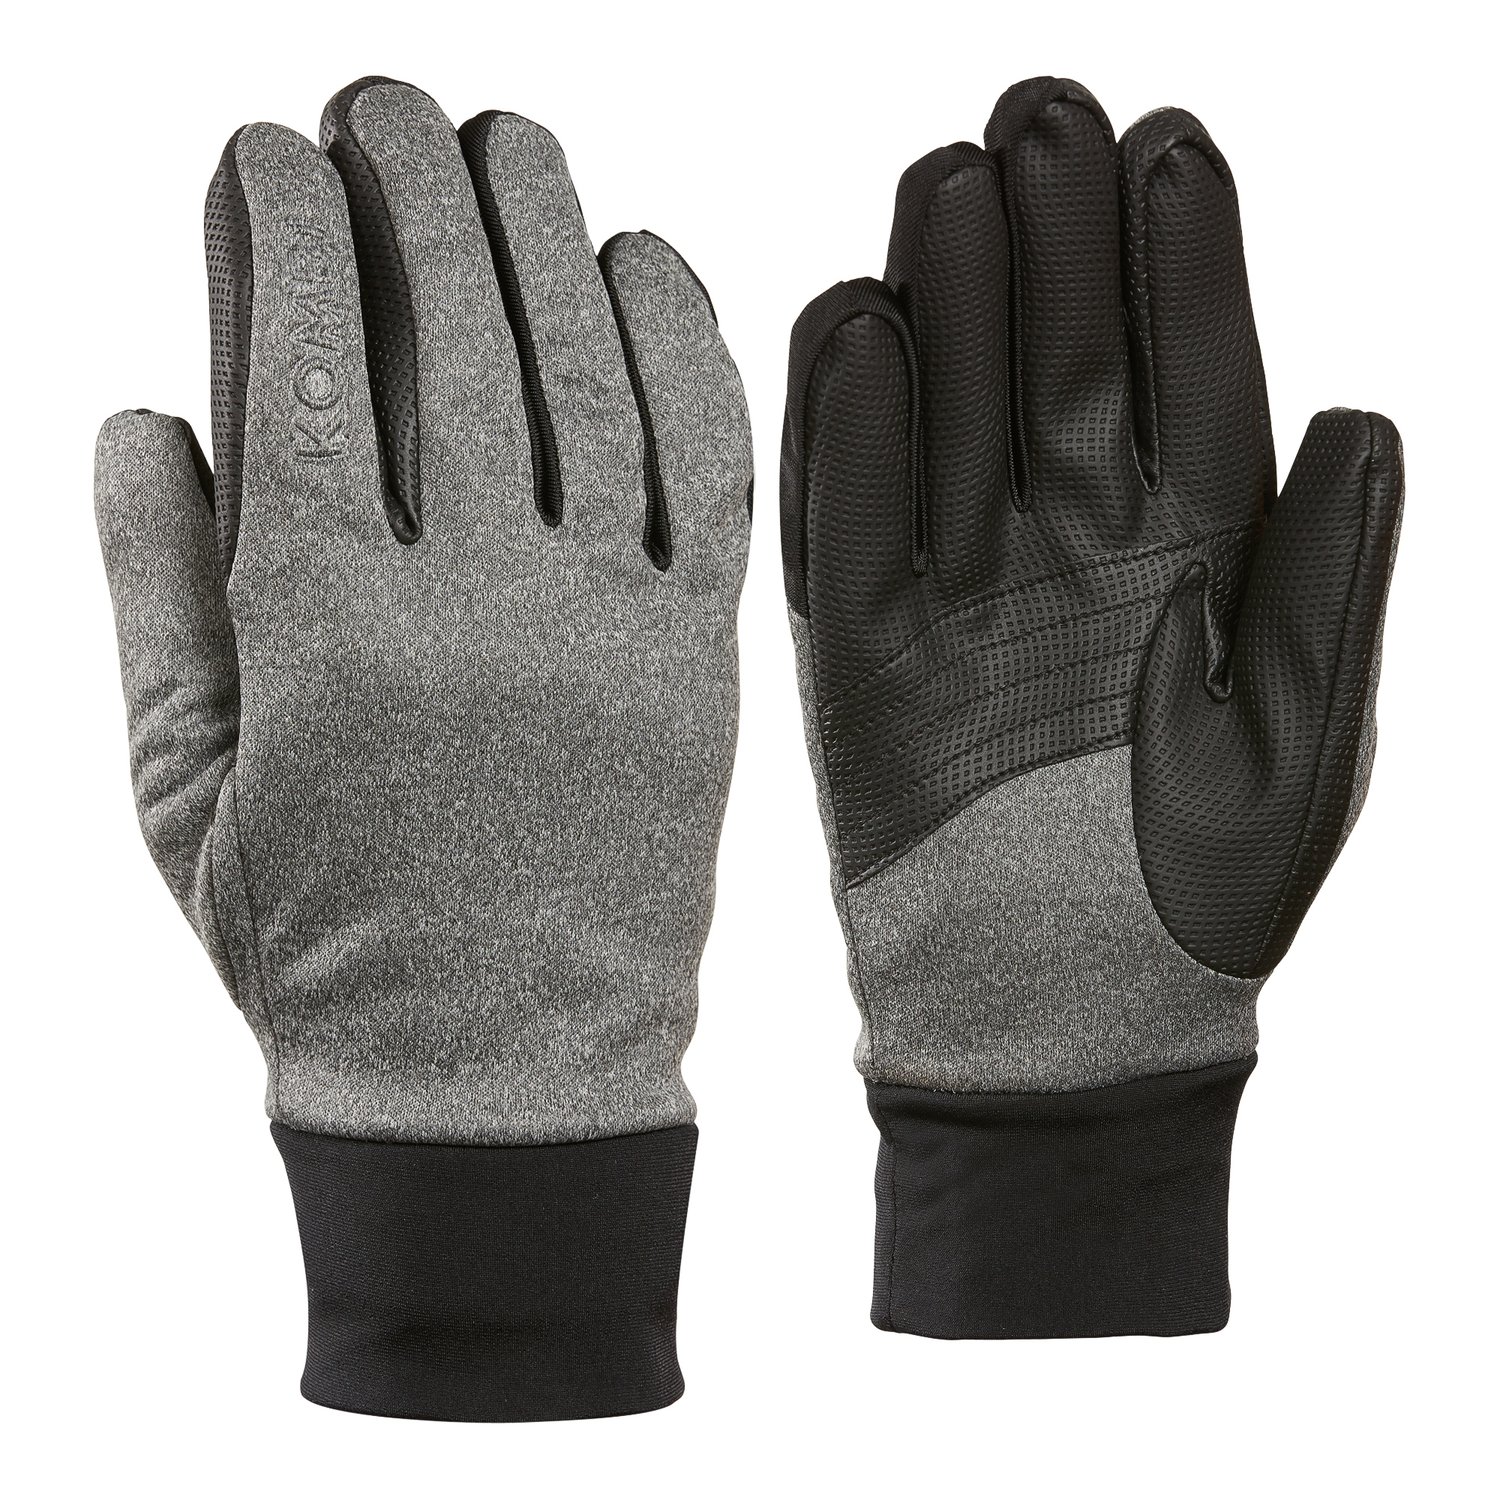 Men’s Winter Multi-Tasker Gloves HEATHER GREY